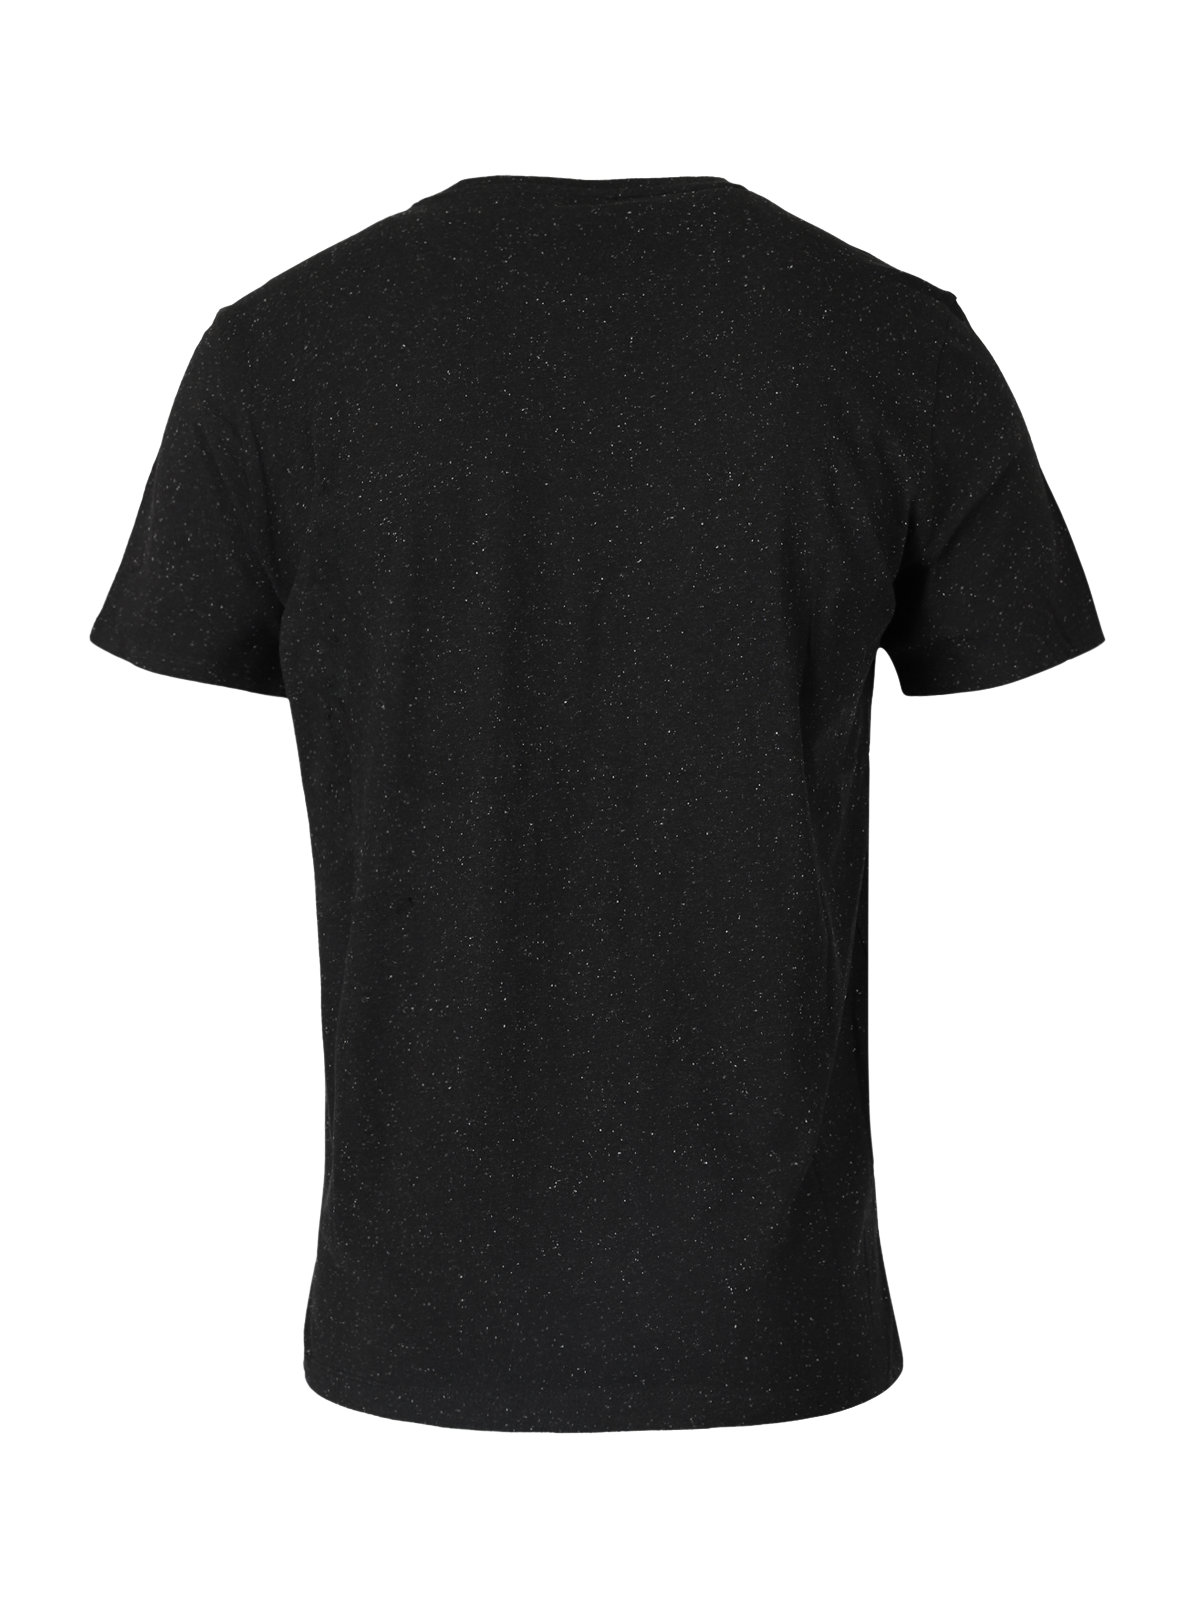 Axle-Neppy Herren T-Shirt | Schwarz